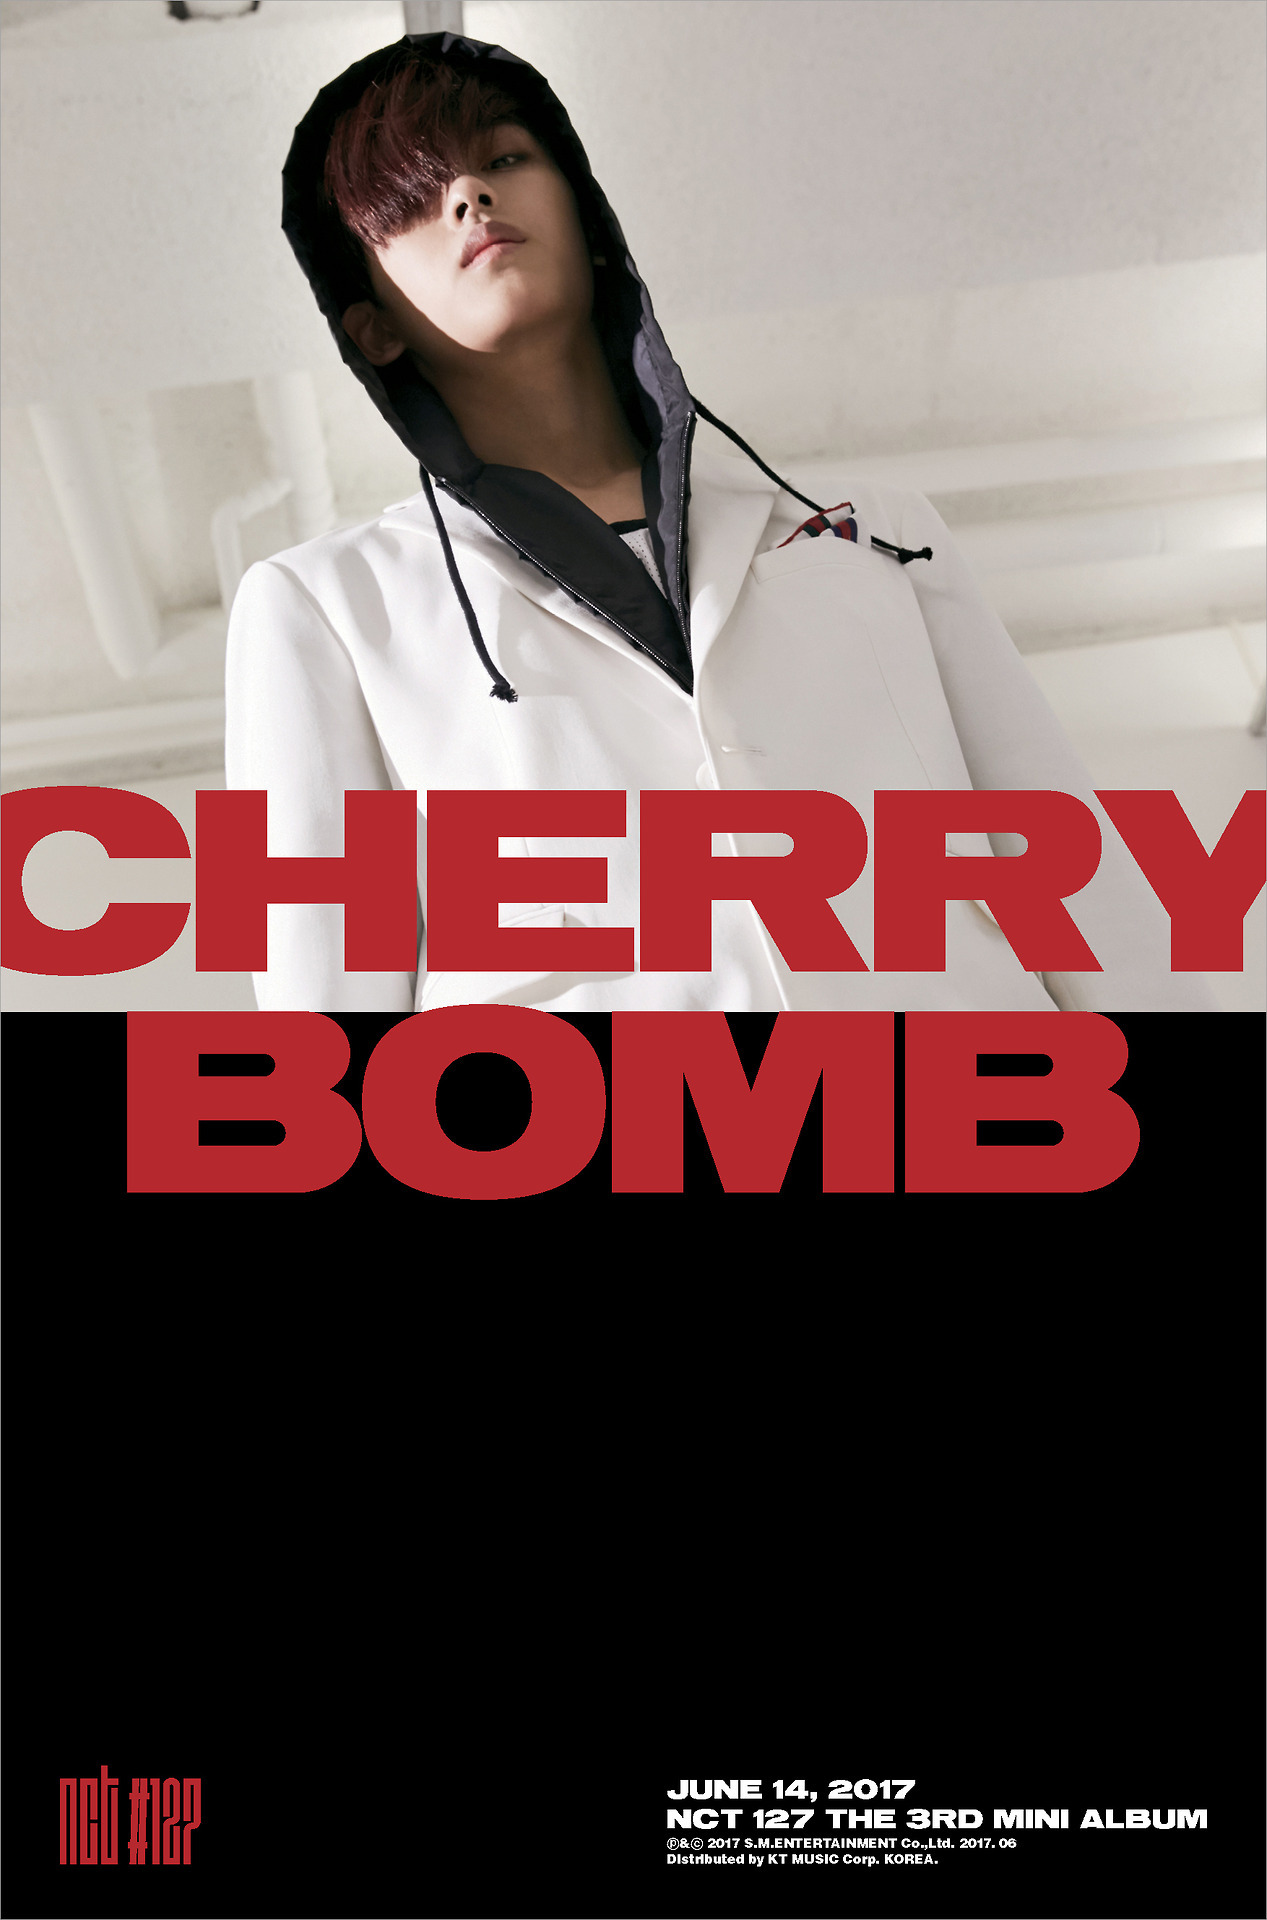 [КАМБЭК] NCT 127 выпустили клип на песню "Cherry Bomb"